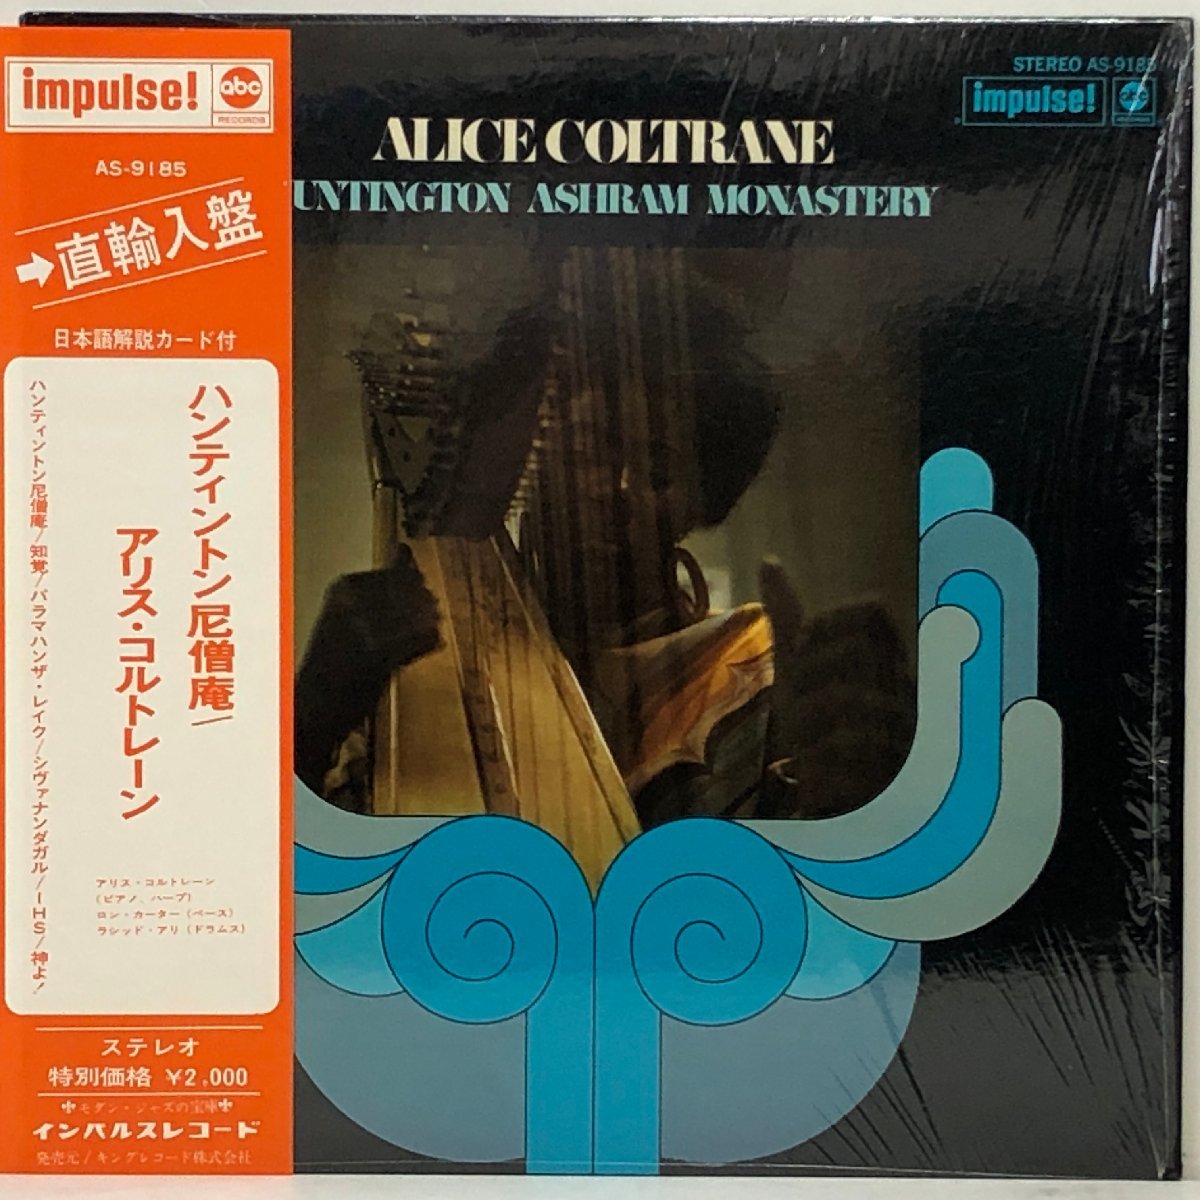 【US盤 LP】AlICE COLTRANE / HUNTINGTON ASHRAM MONASTERY / アリス・コルトレーン / AS9185